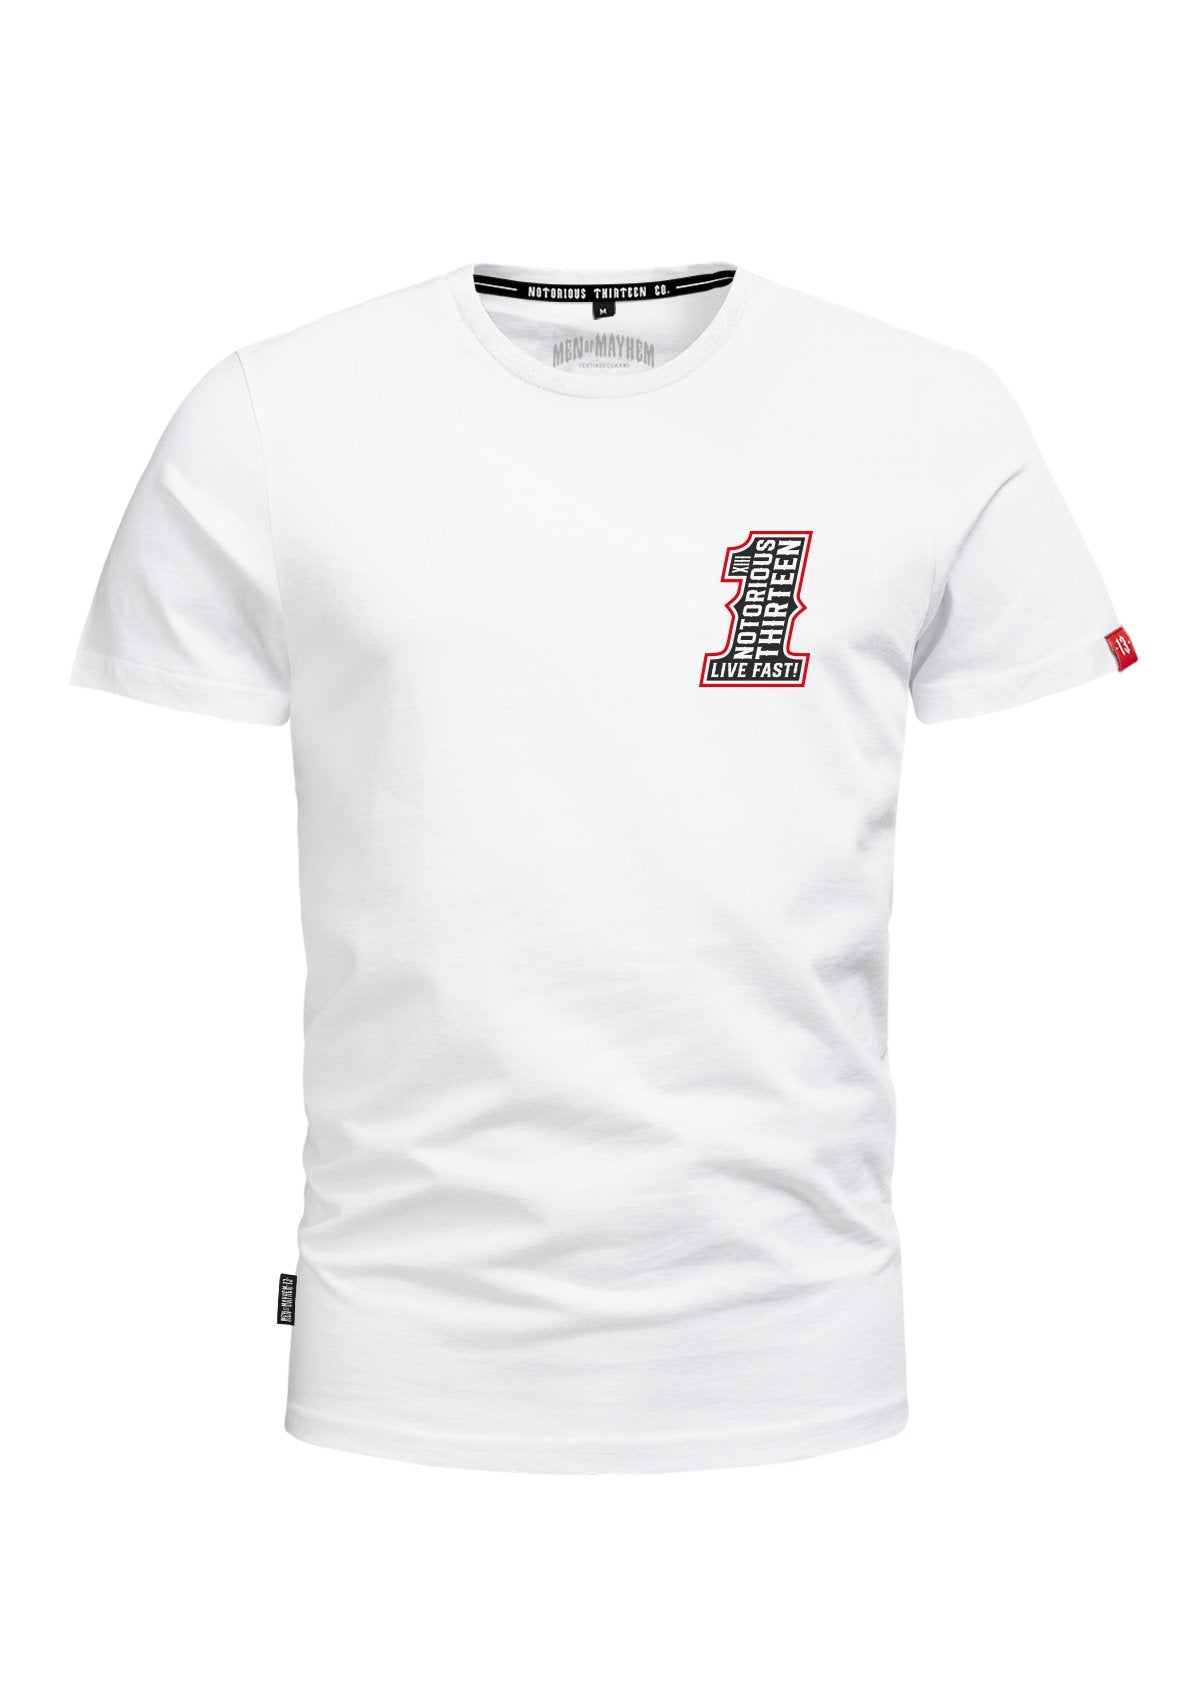 T-Shirt ONE W/S/R - MEN OF MAYHEM - ALAIKO-EXCHANGES-MM-M-1010-TO-WSR - Men - One